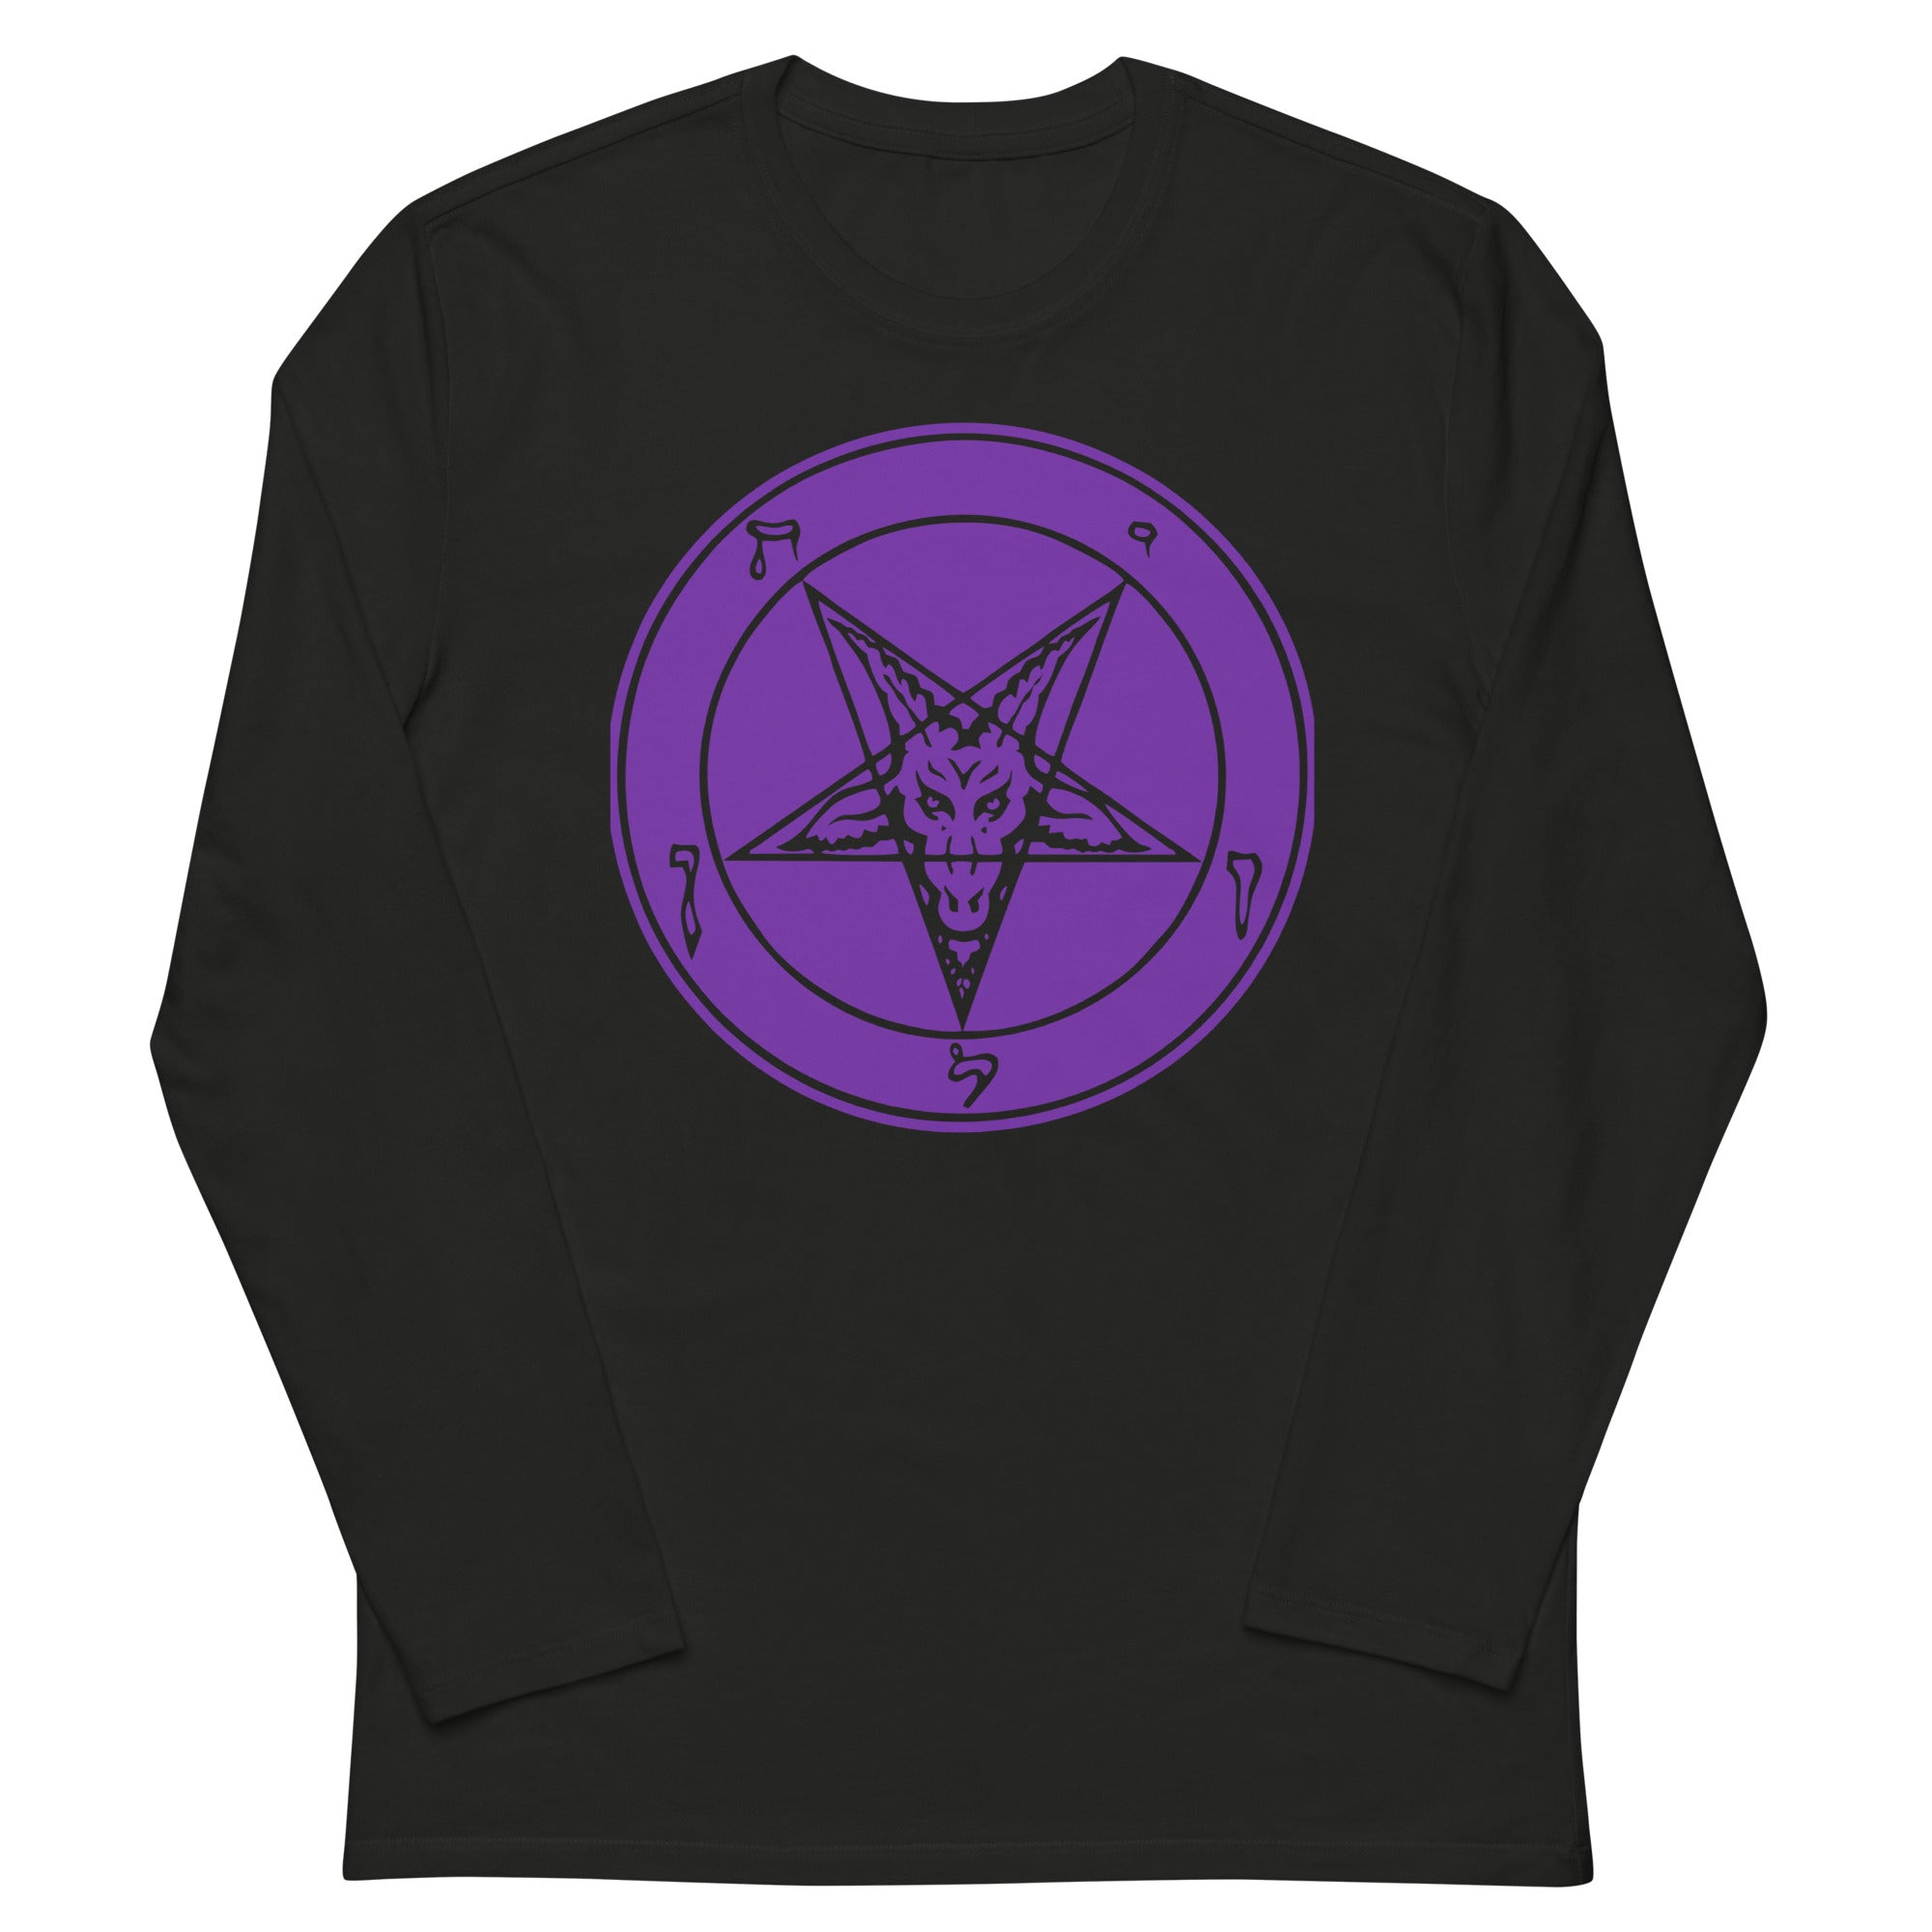 Classic Sigil of Baphomet Goat Head Pentagram Women's fashion long sleeve shirt Purple Print - Edge of Life Designs